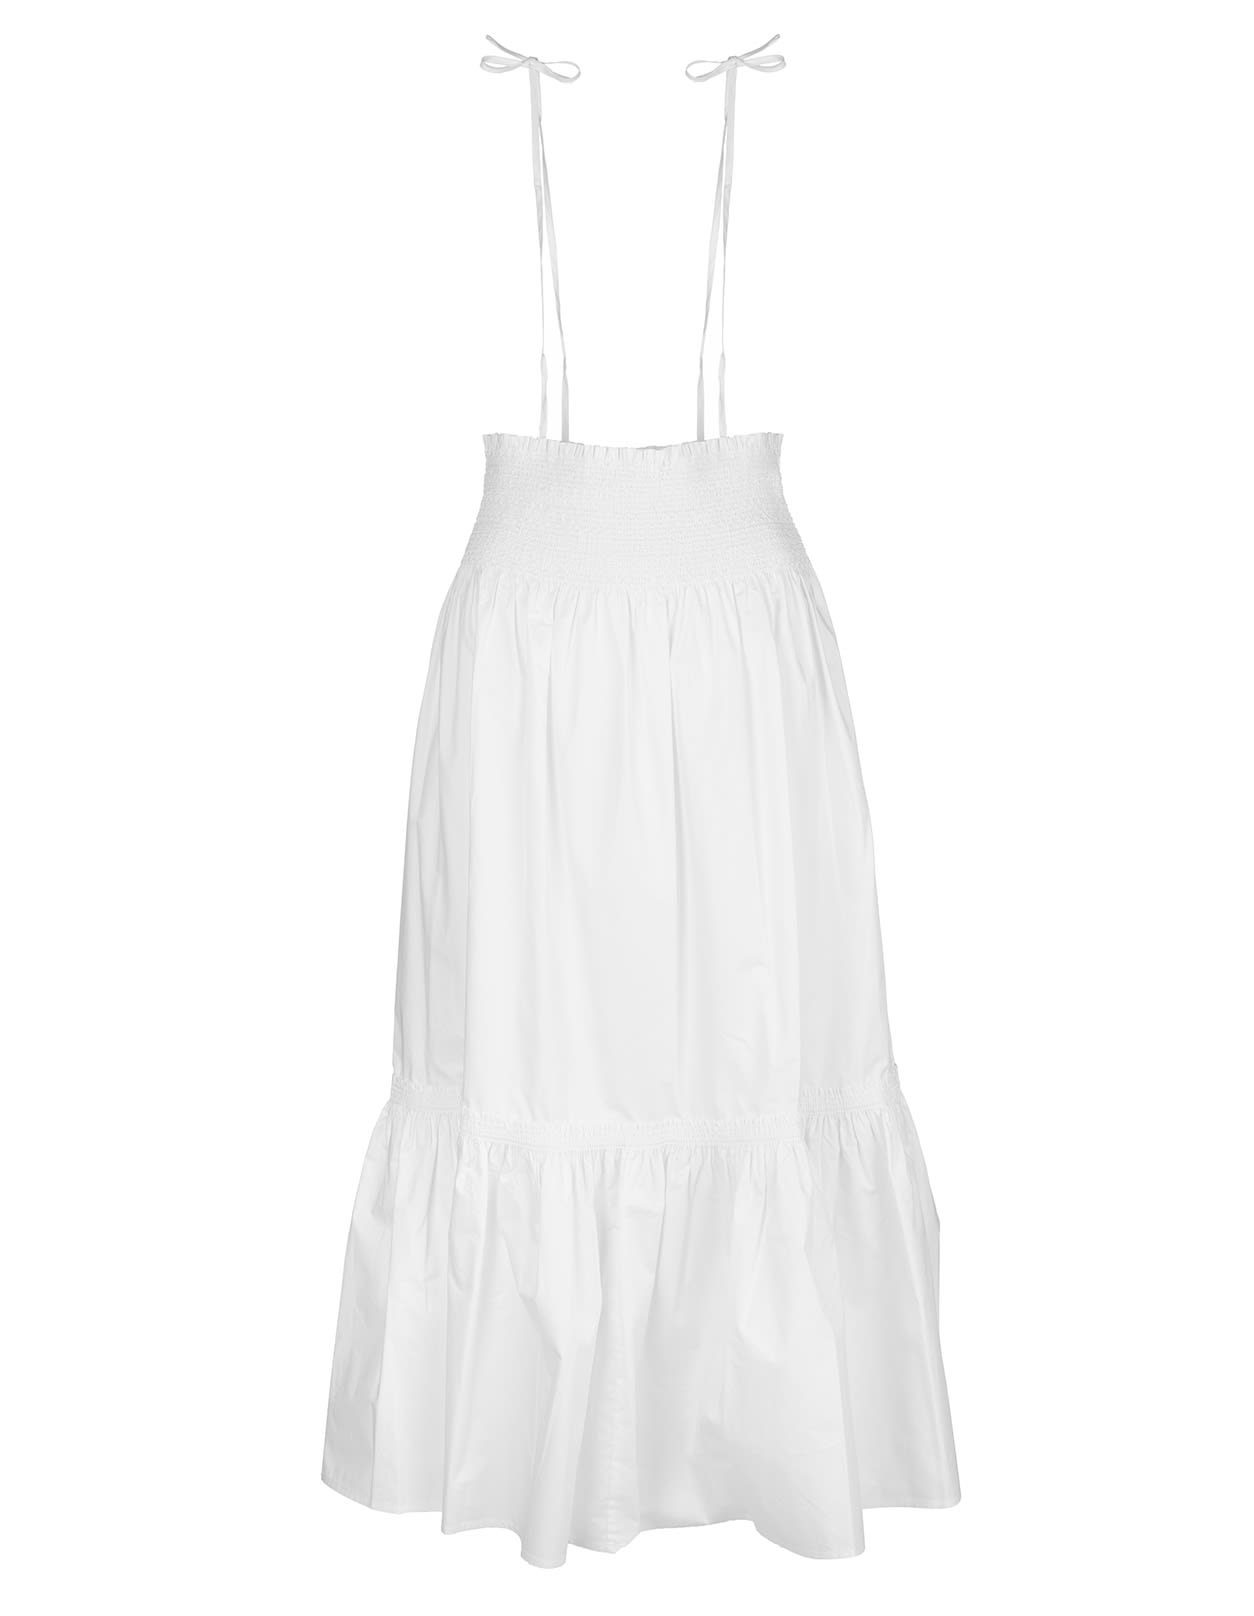 Tory Burch Convertible Skirt In White Poplin